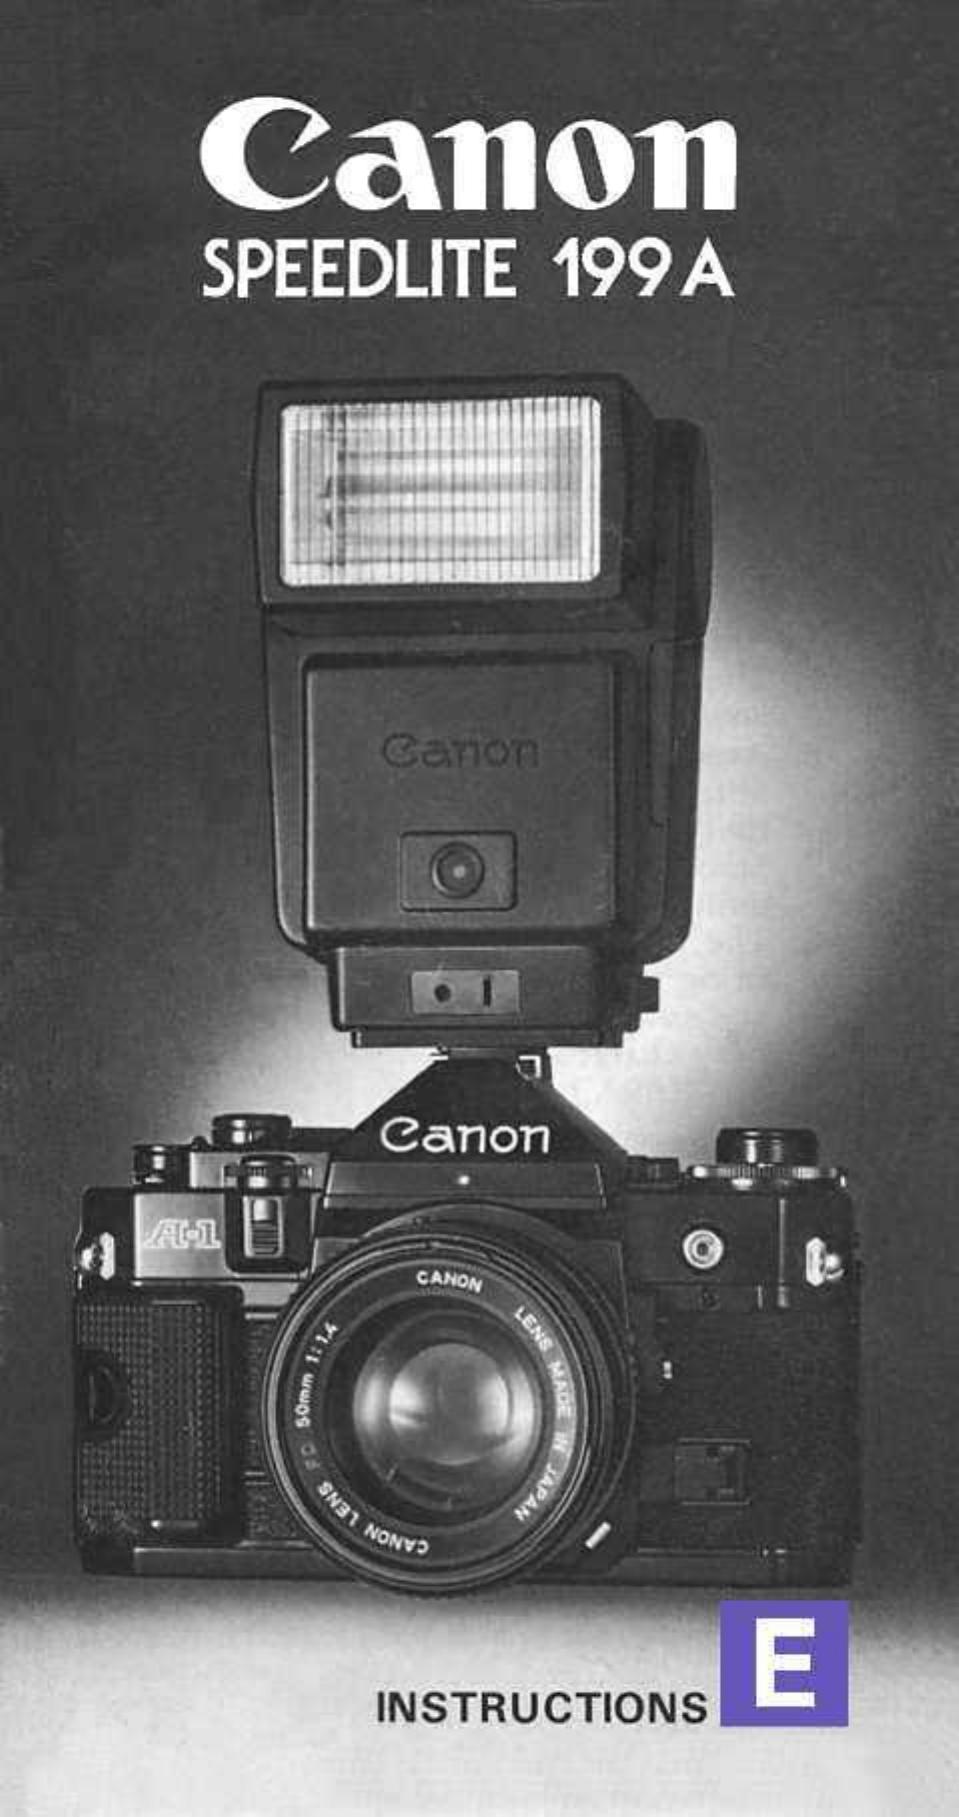 Canon 199 A Camera Flash User Manual